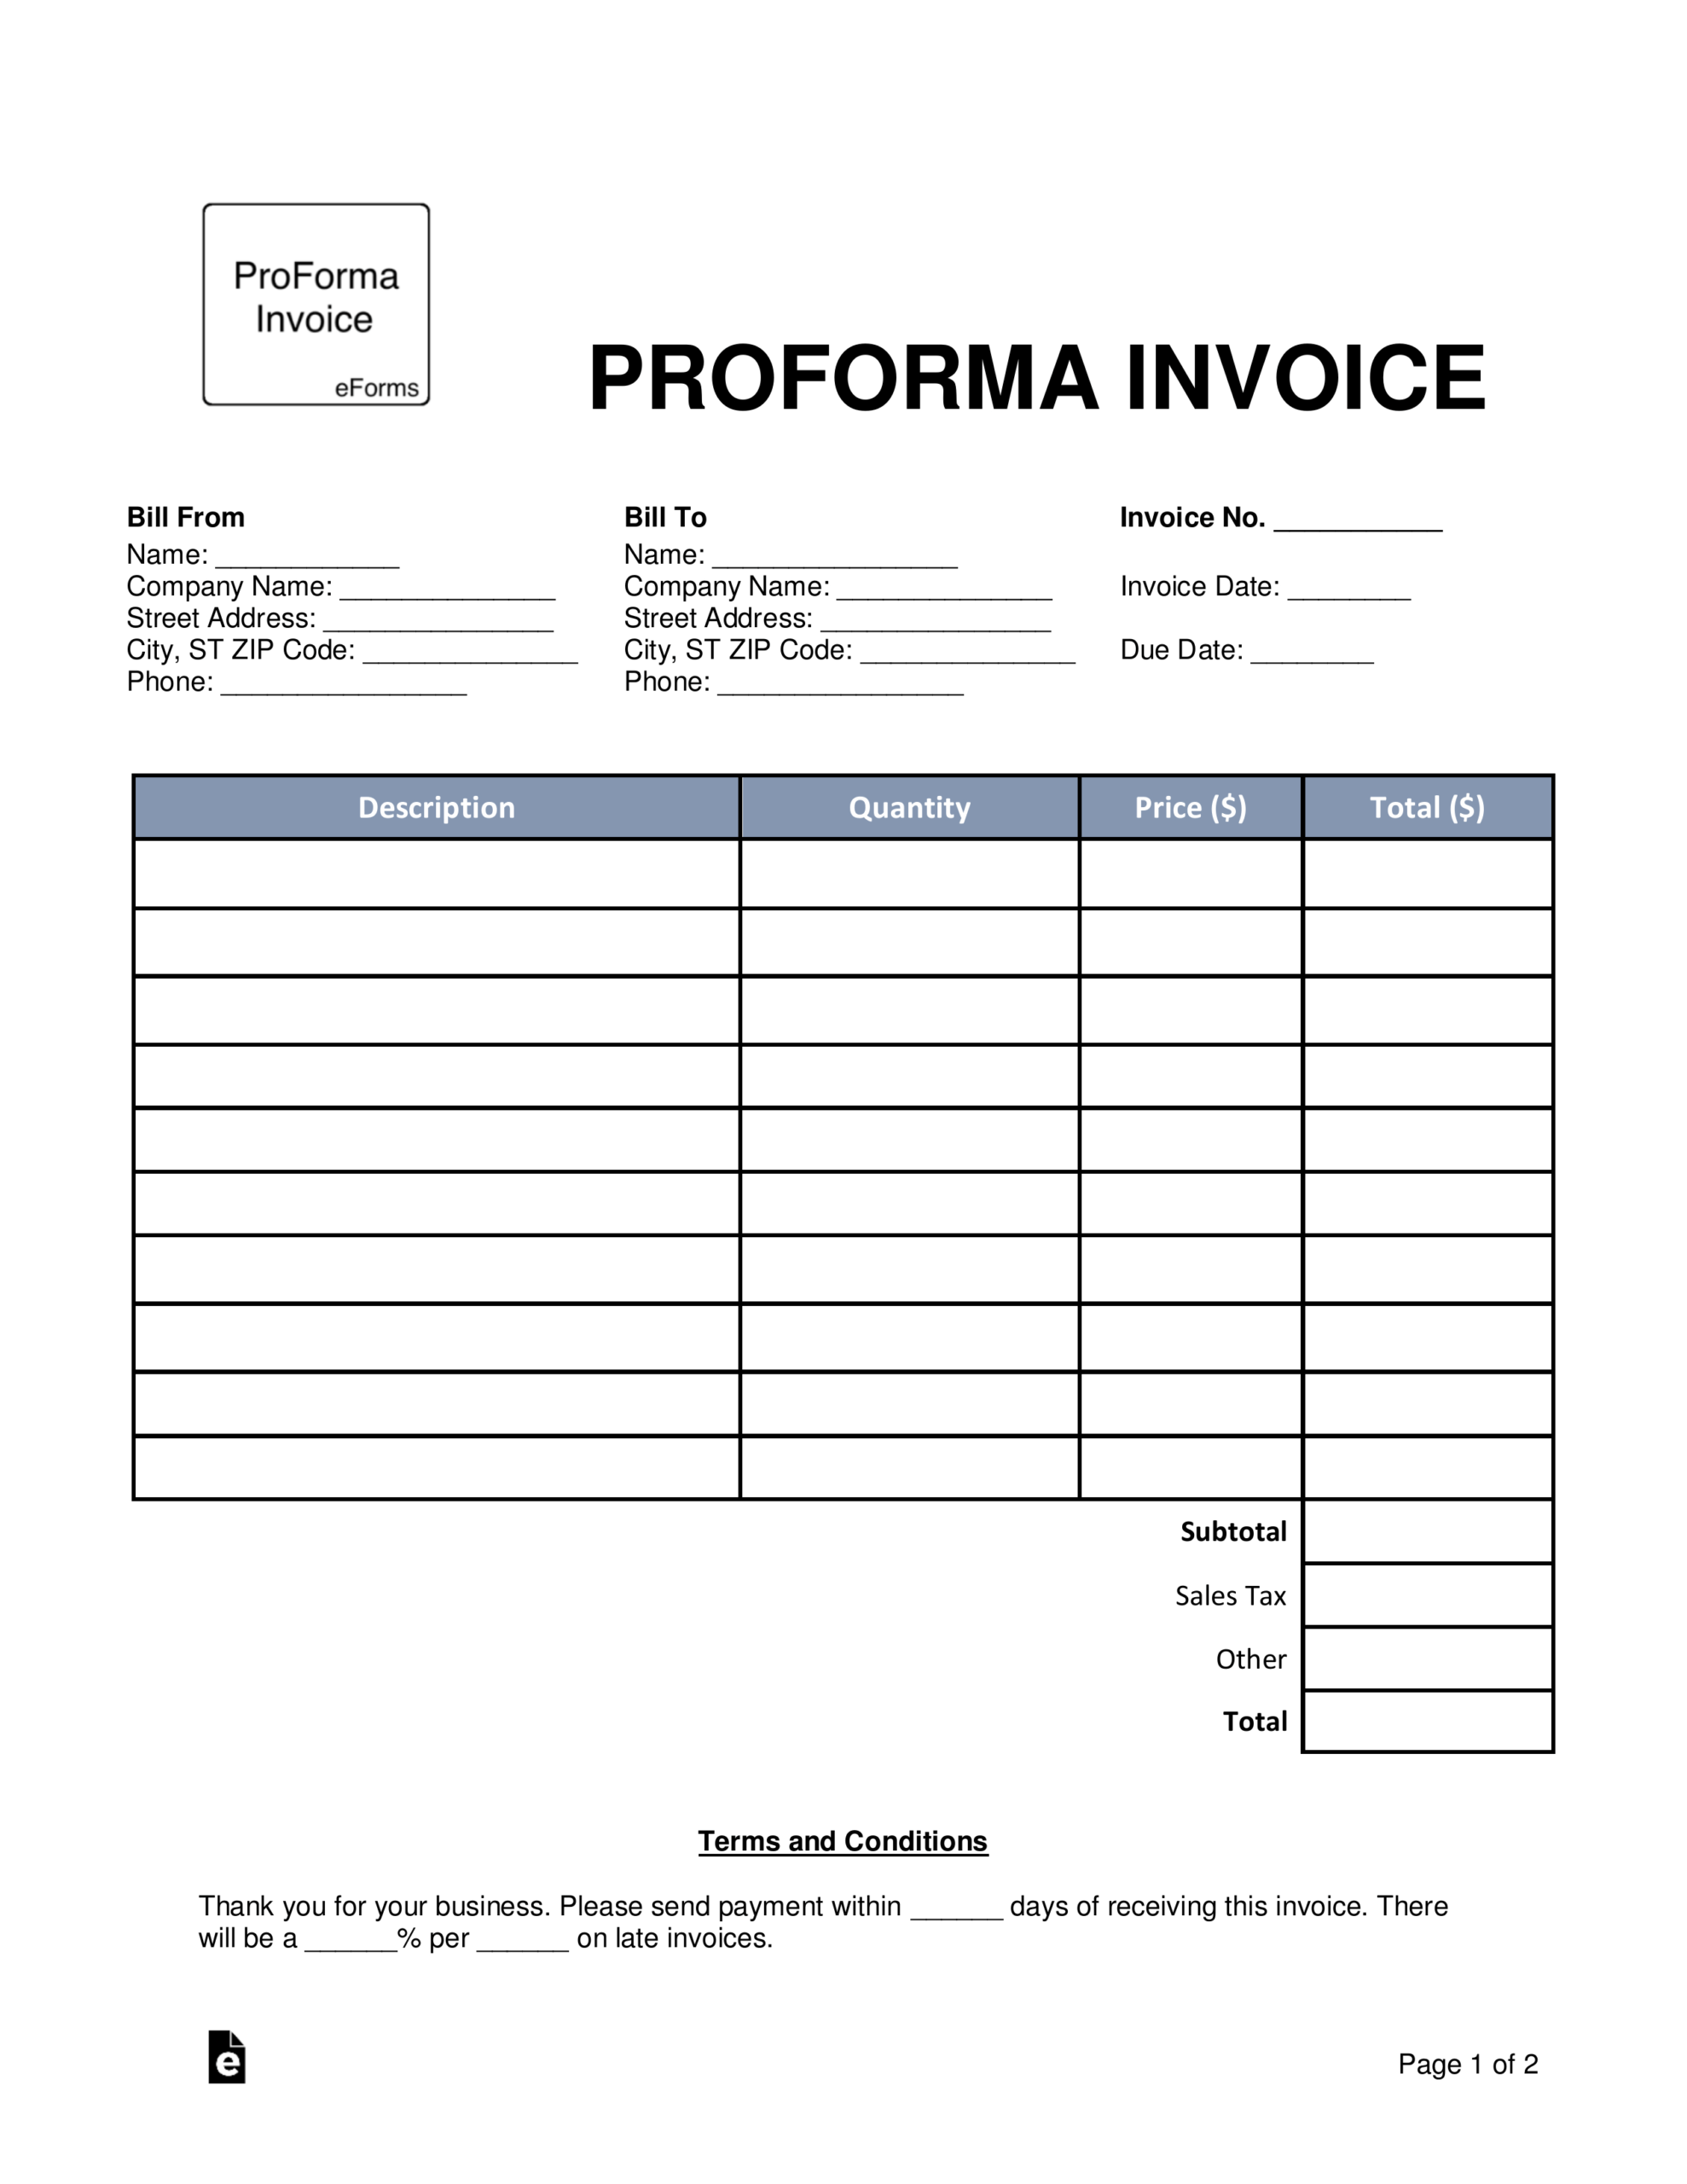 Free Proforma Invoice Template - Word | Pdf | Eforms – Free In Free Proforma Invoice Template Word